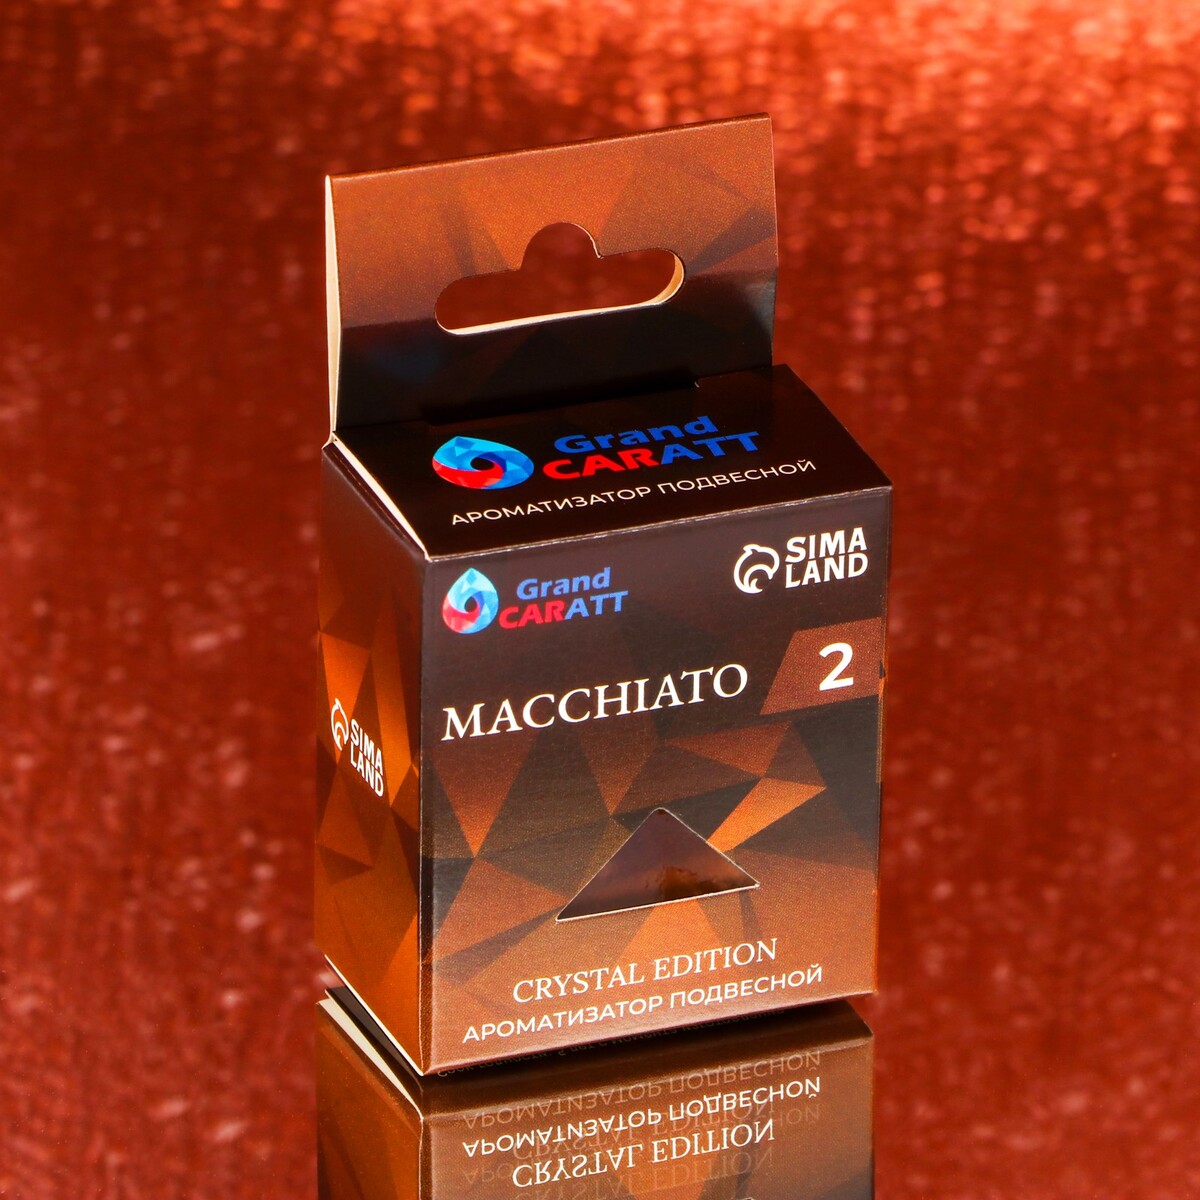 Ароматизатор подвесной grand caratt crystal edition, macchiato, 7 мл Grand Caratt